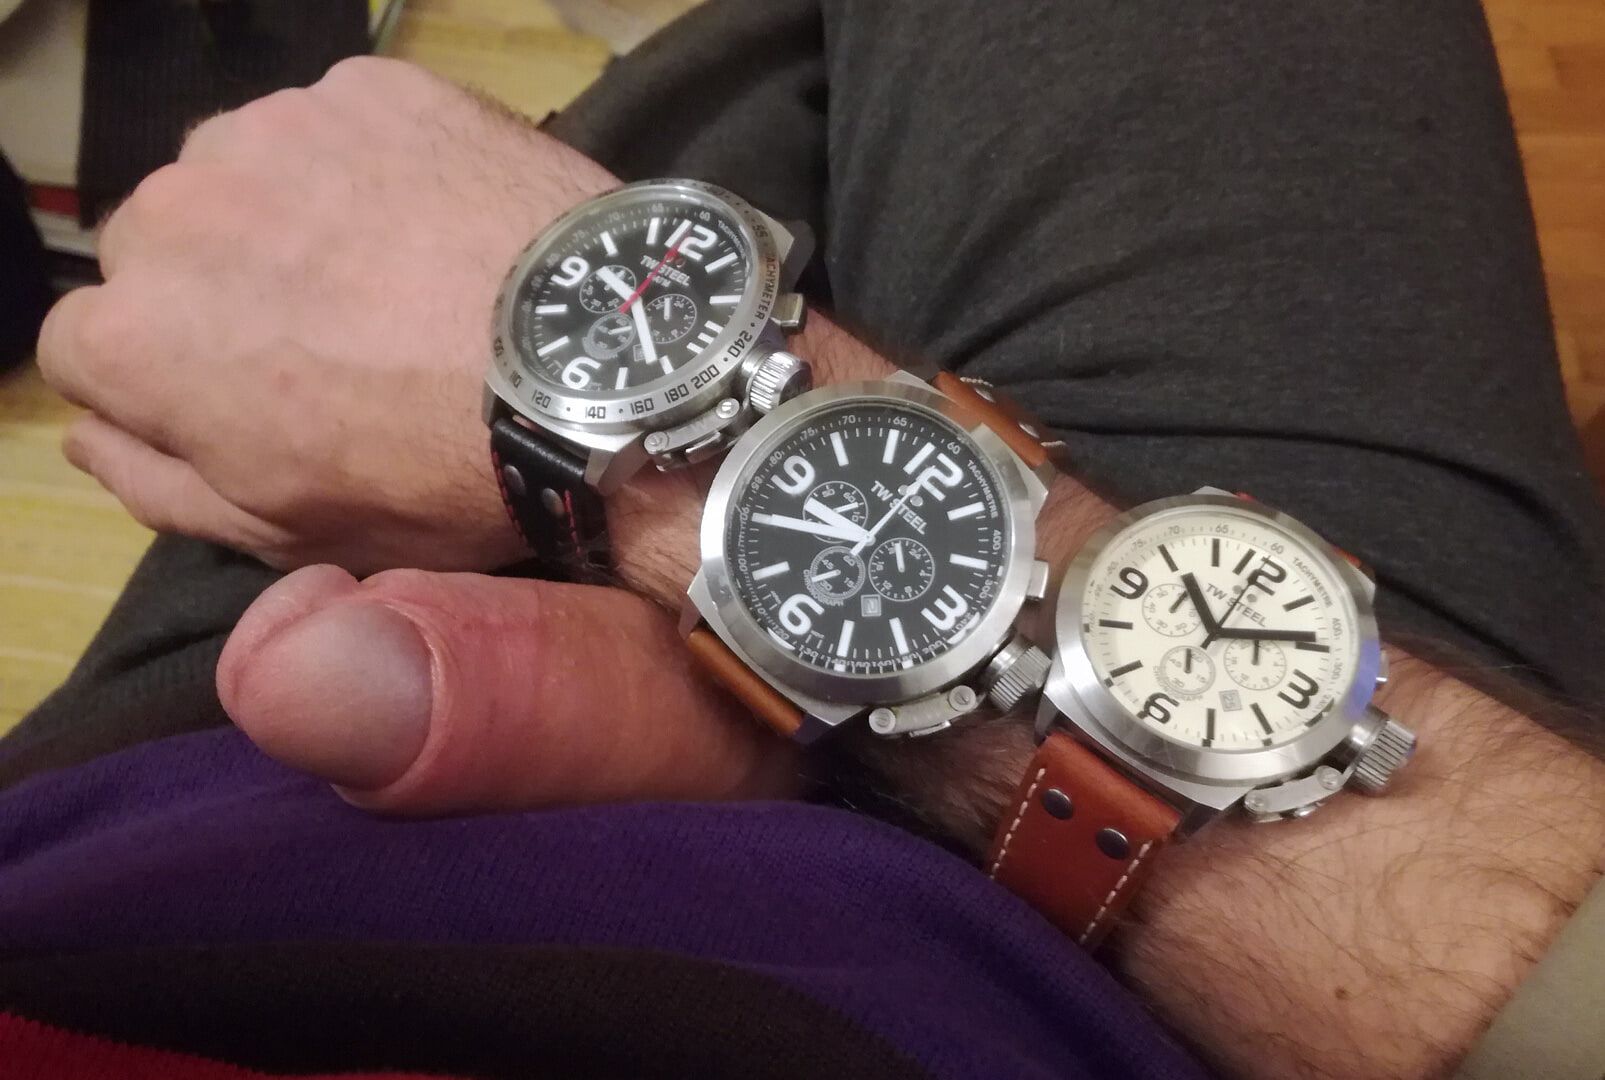 TW Steel watches